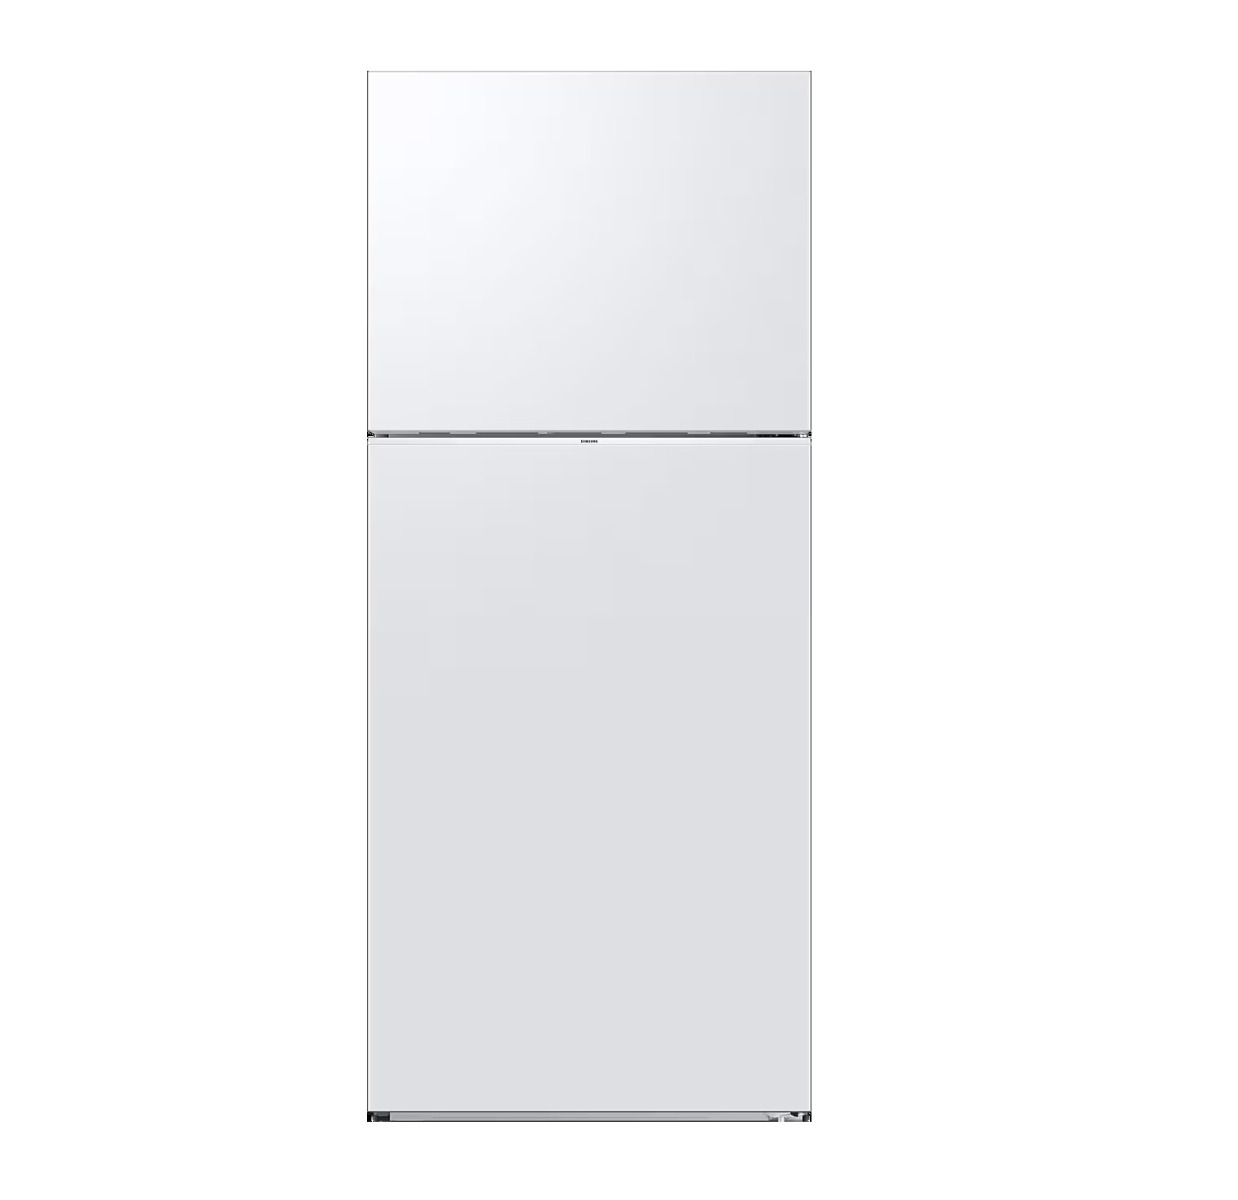 SAMSUNG Two-door Refrigerator, 13.7ft.cu, 388 Ltr, White, Thailand - RT38CG6420WWZA